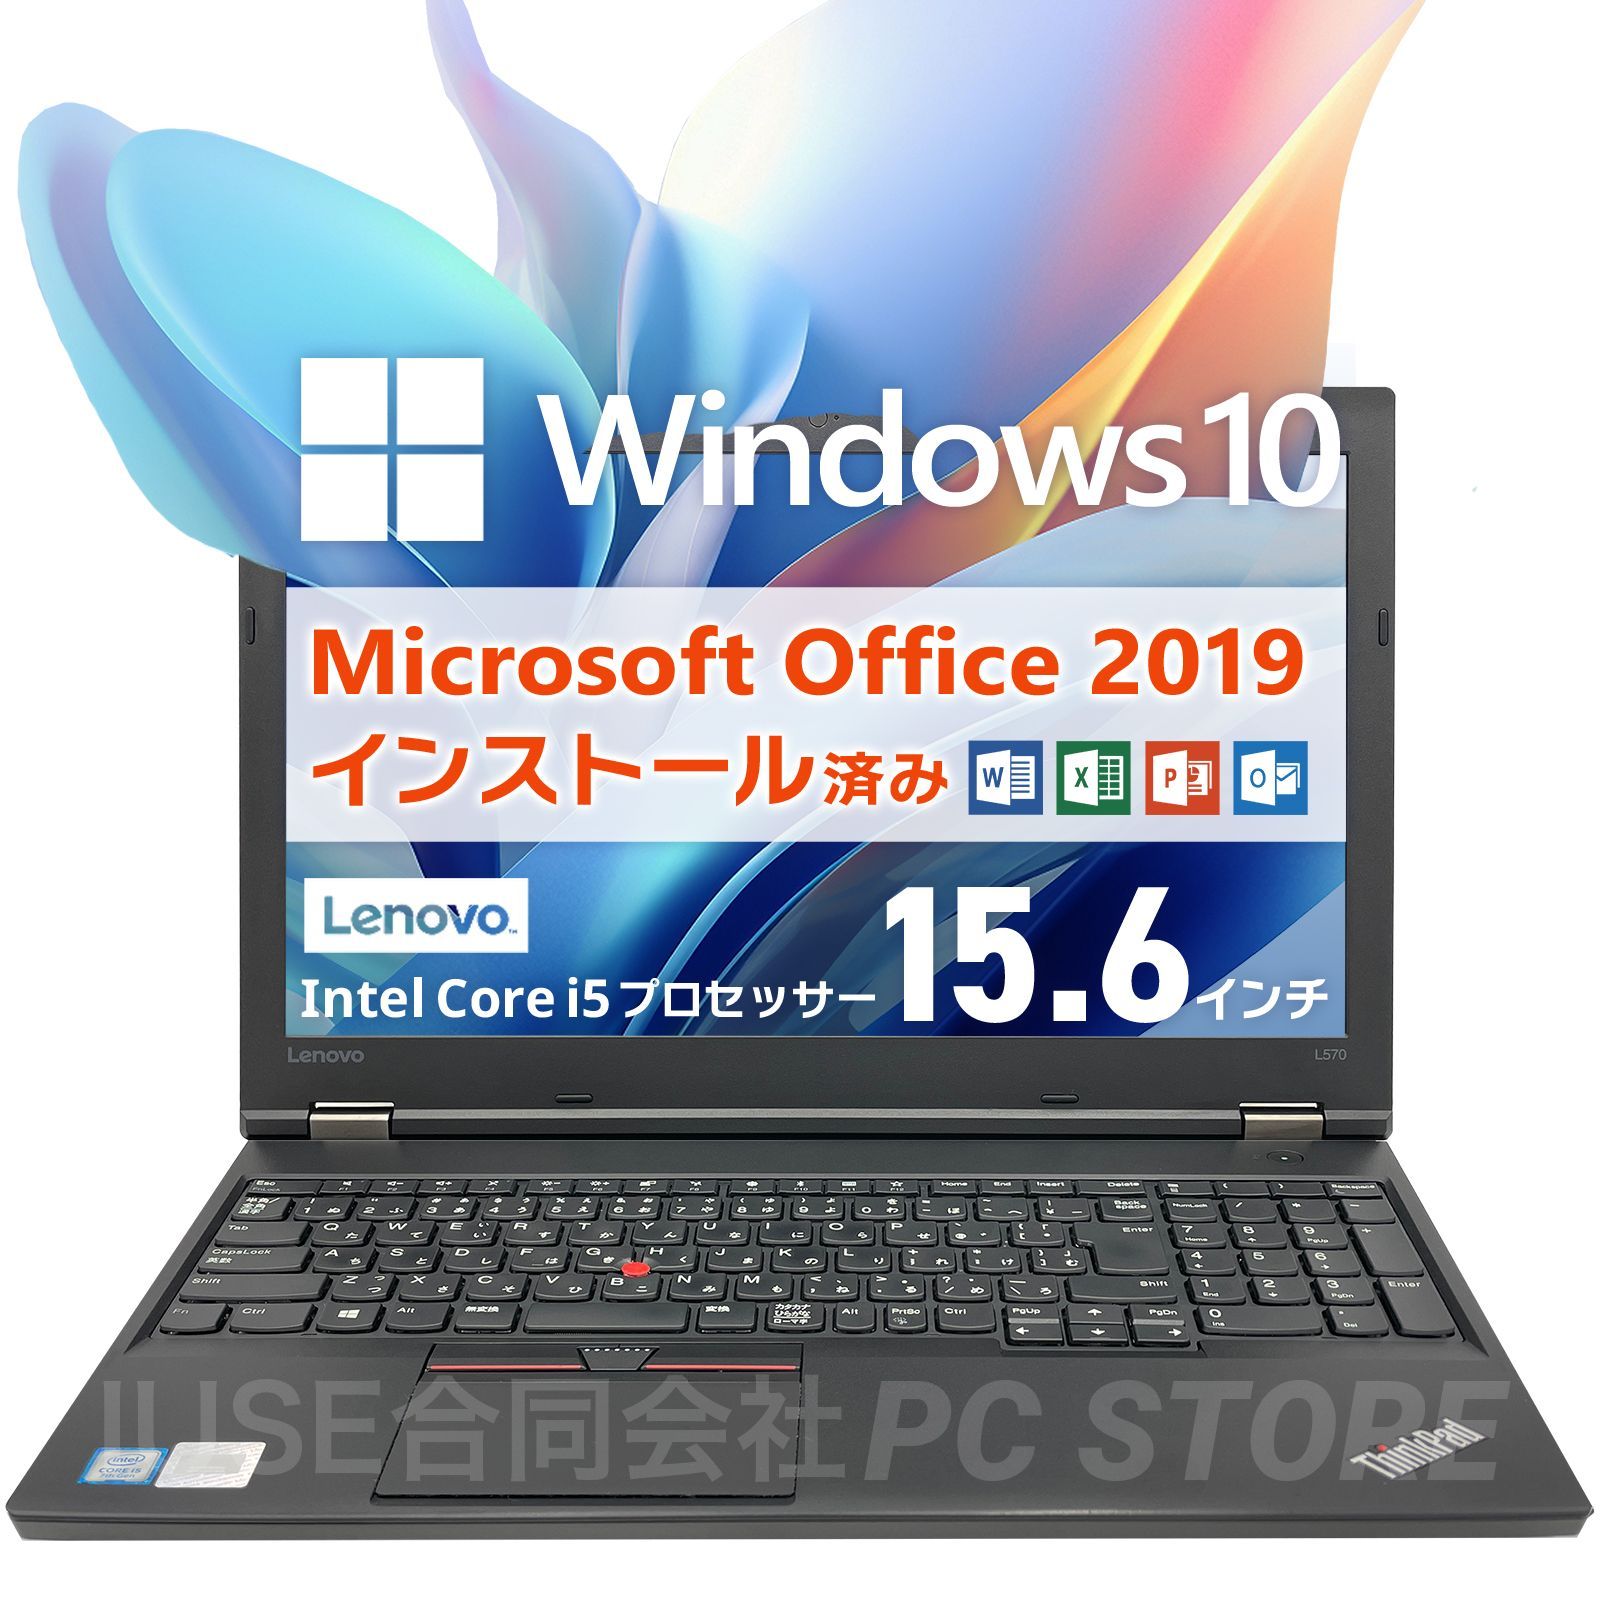 Lenovo ThinkPad L570 Windows10搭載 15.6インチ/第7世代Core i5-7200U/メモリ16GB/新品SSD480GB  Microsoft Office 2019 HB(Word/Excel/PowerPoint) PC STORE メルカリ